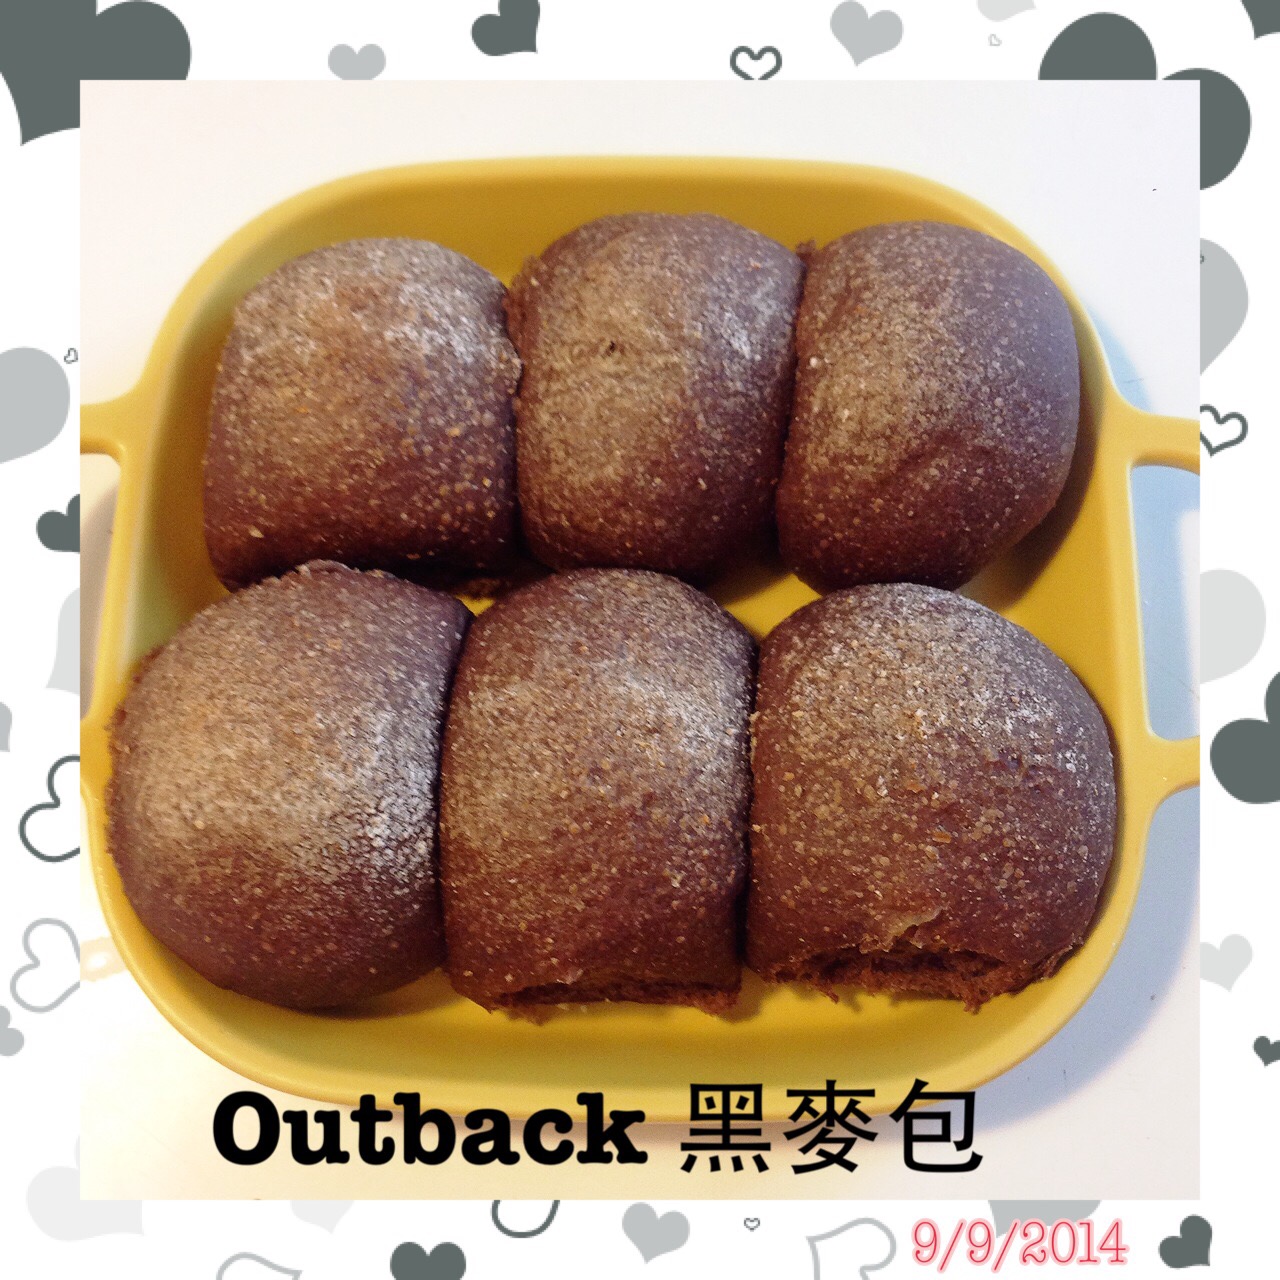 R: Outback Bread